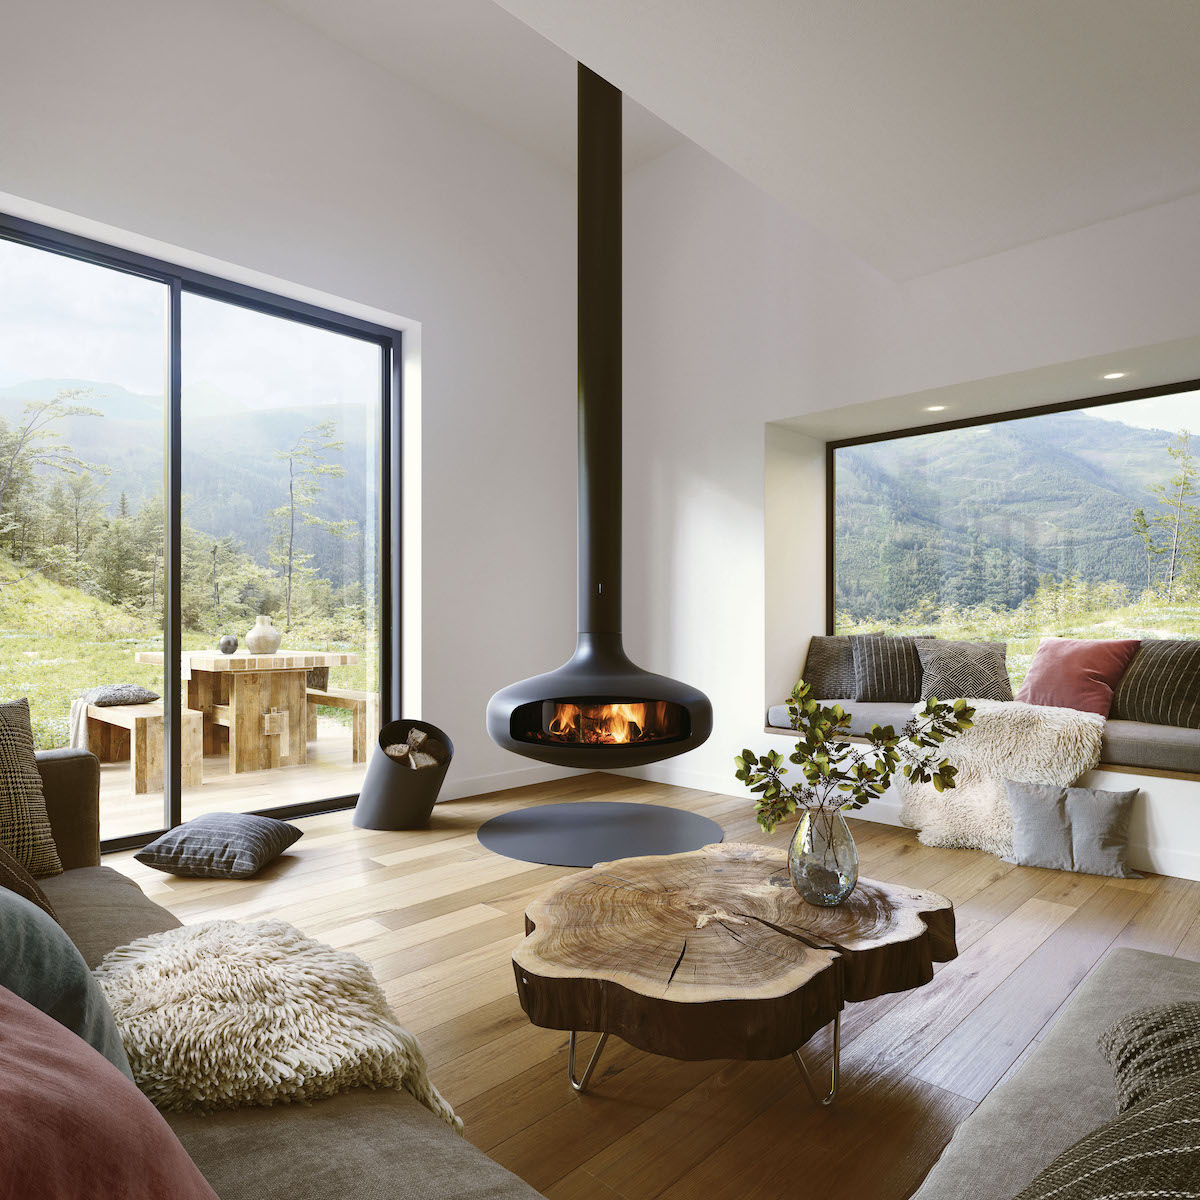 Glazed Domofocus fireplace in living room